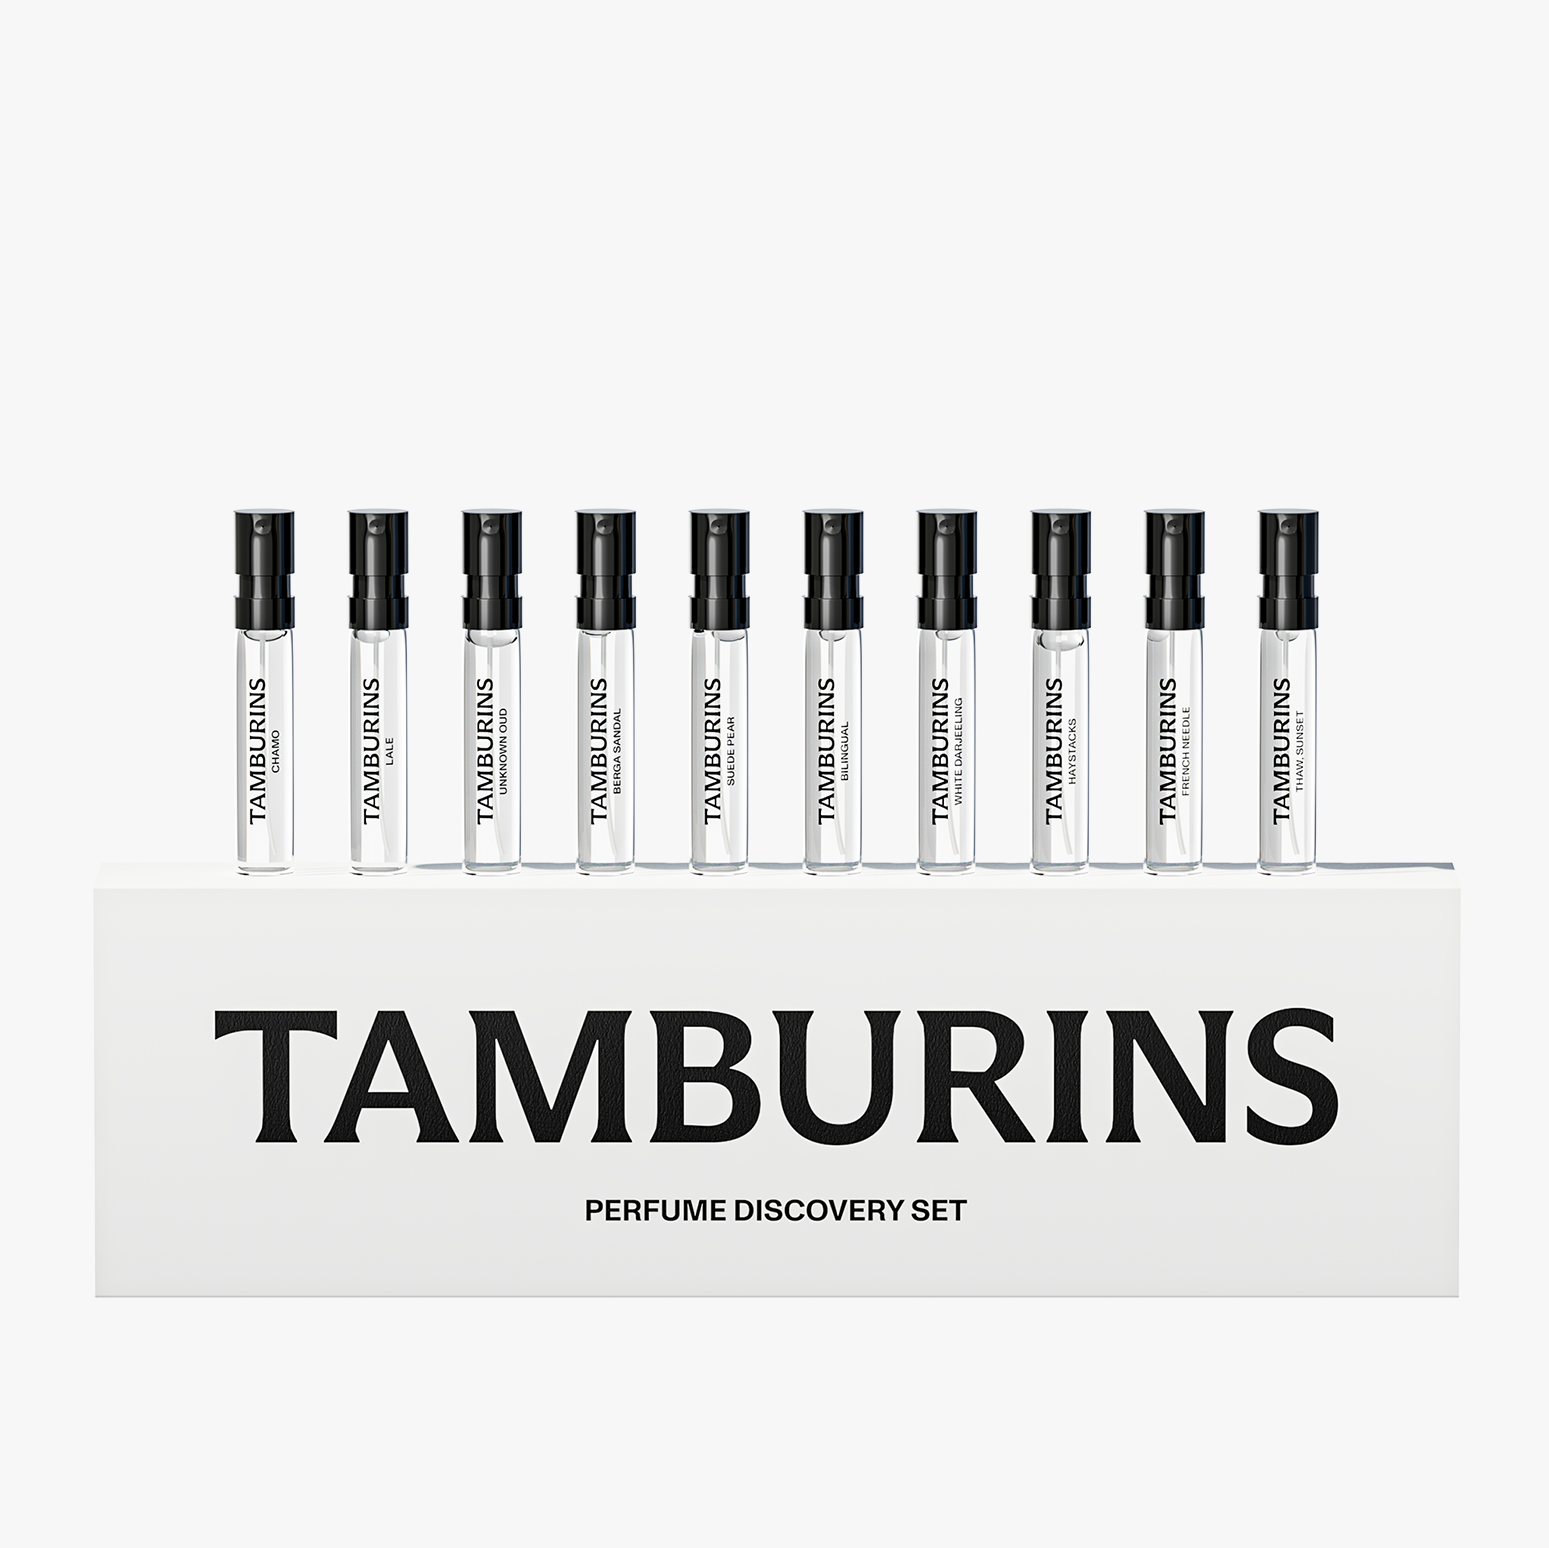 Tamburins-10種香水探索組合-Discovery Set